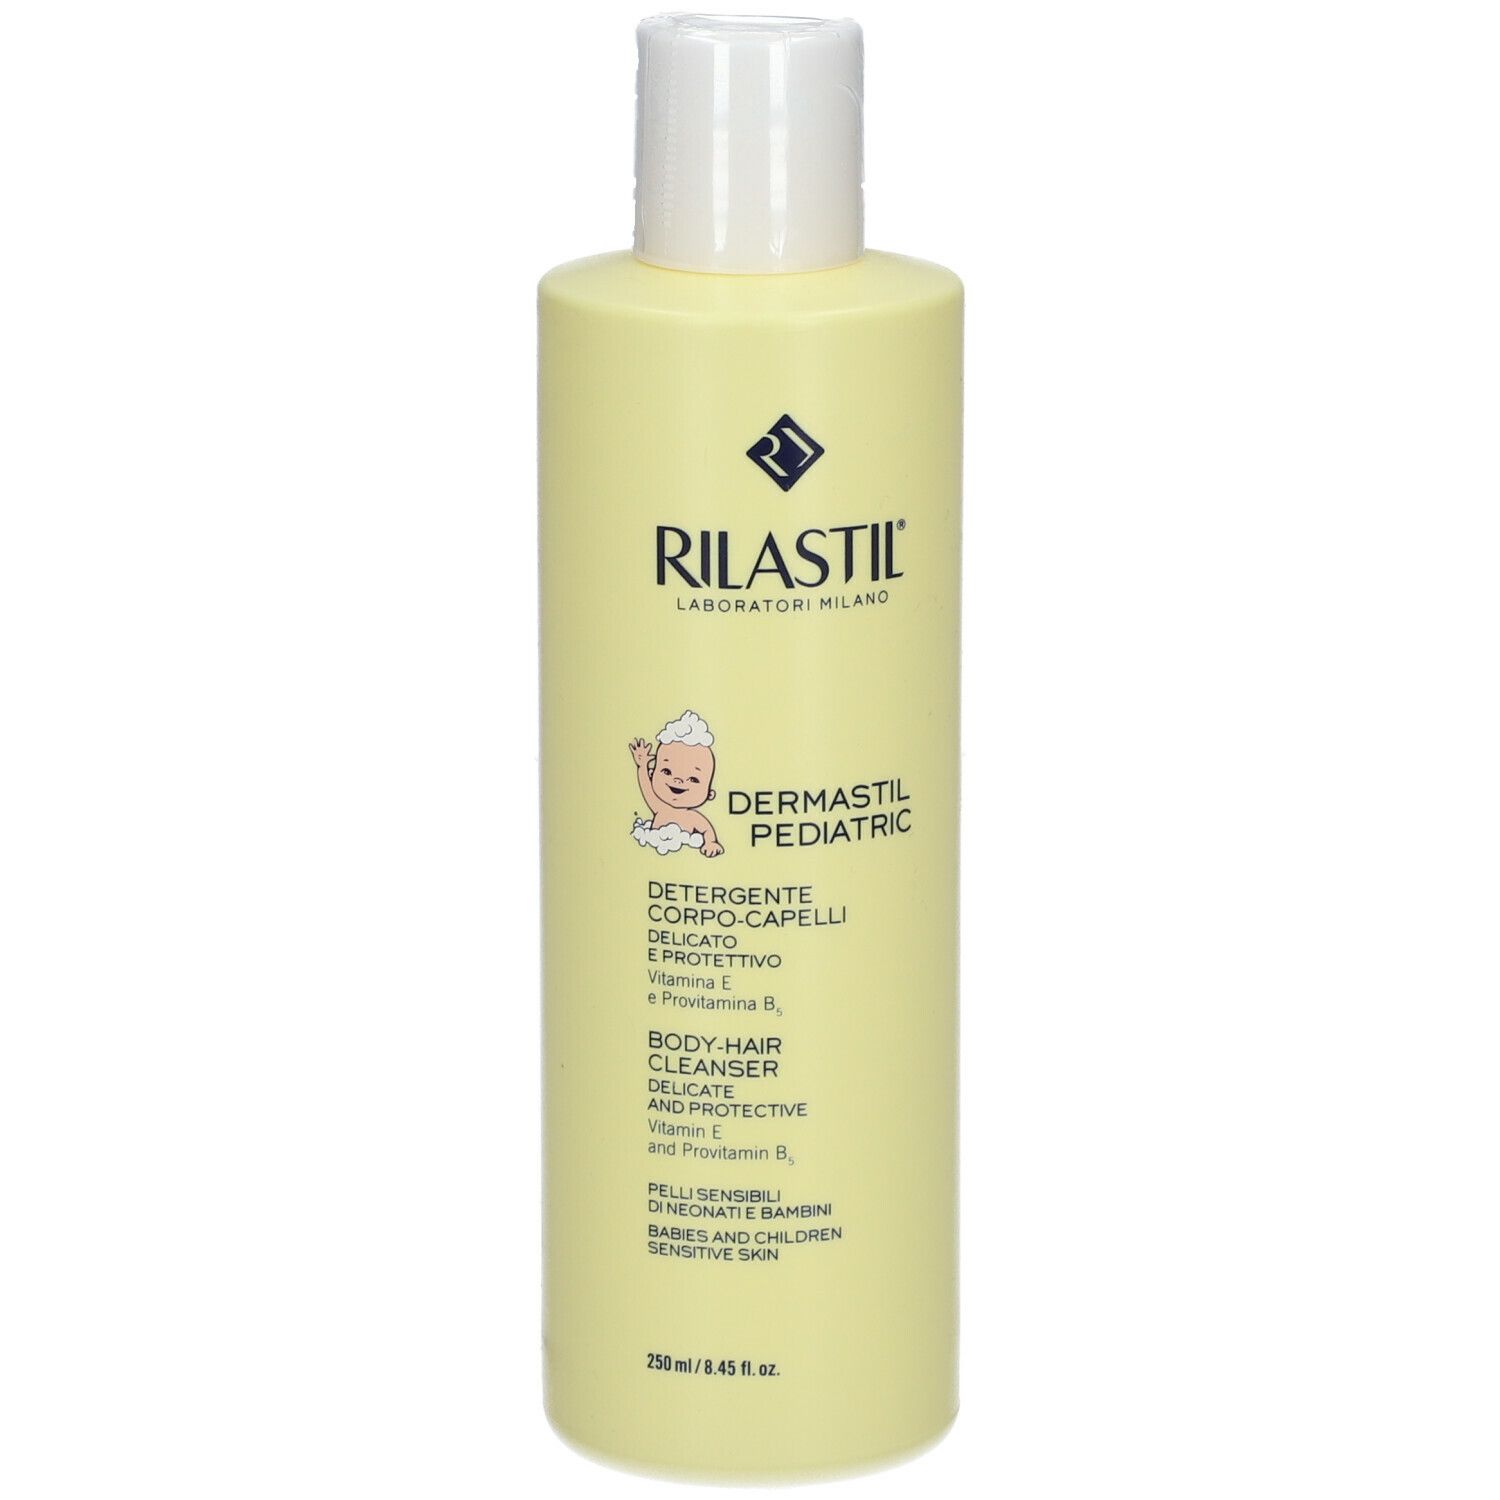 RILASTIL® Dermastil Pediatric Detergente Corpo-capelli